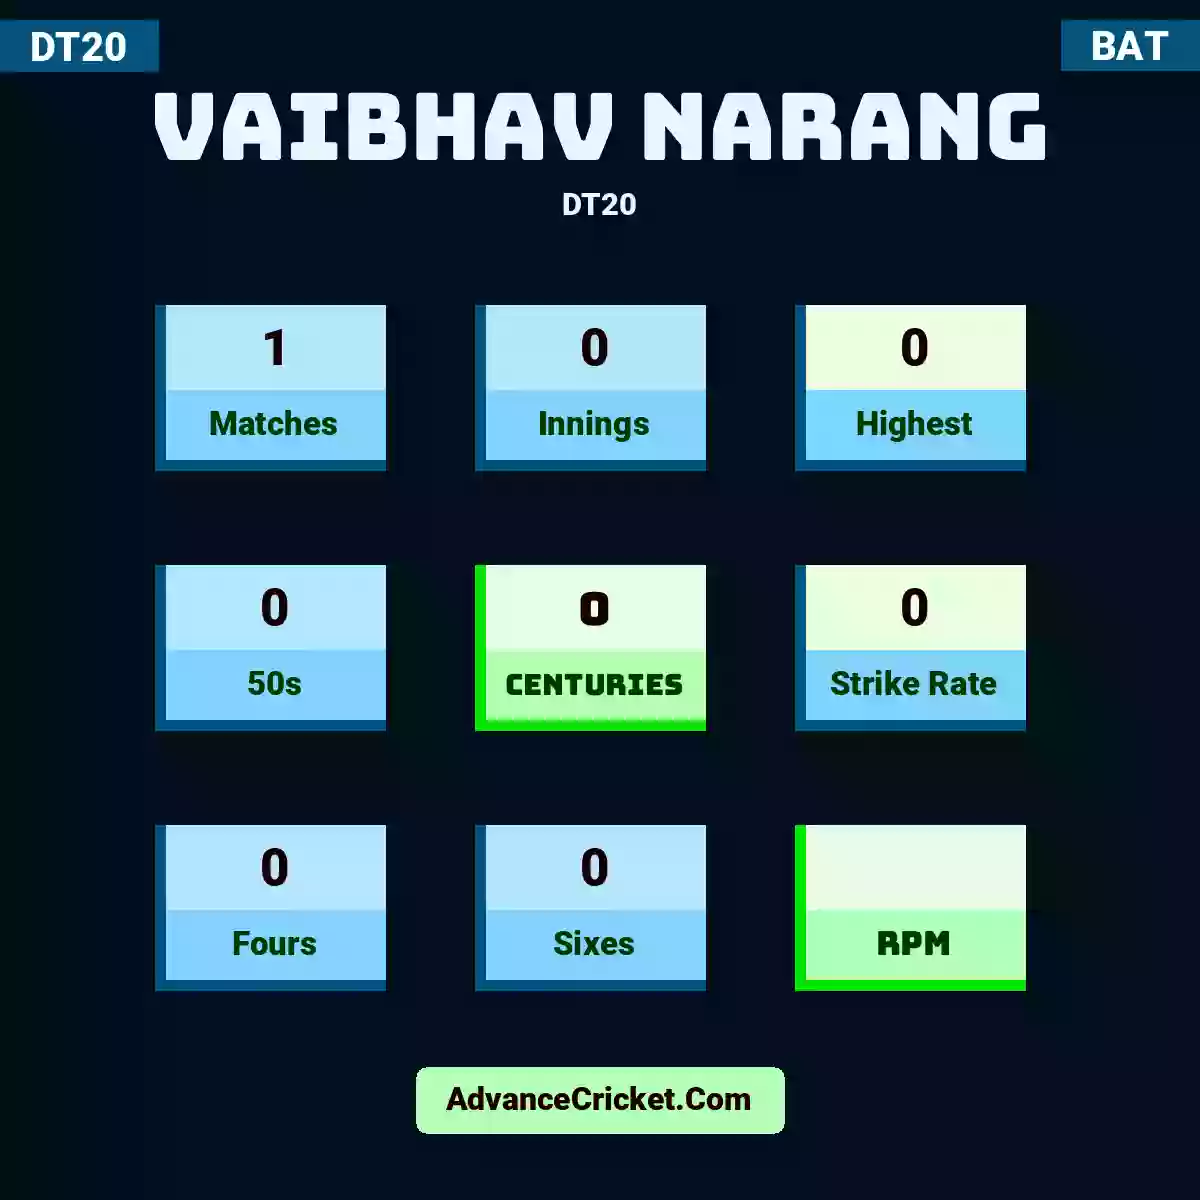 Vaibhav Narang DT20 , Vaibhav Narang played 1 matches, scored 0 runs as highest, 0 half-centuries, and 0 centuries, with a strike rate of 0. V.Narang hit 0 fours and 0 sixes.